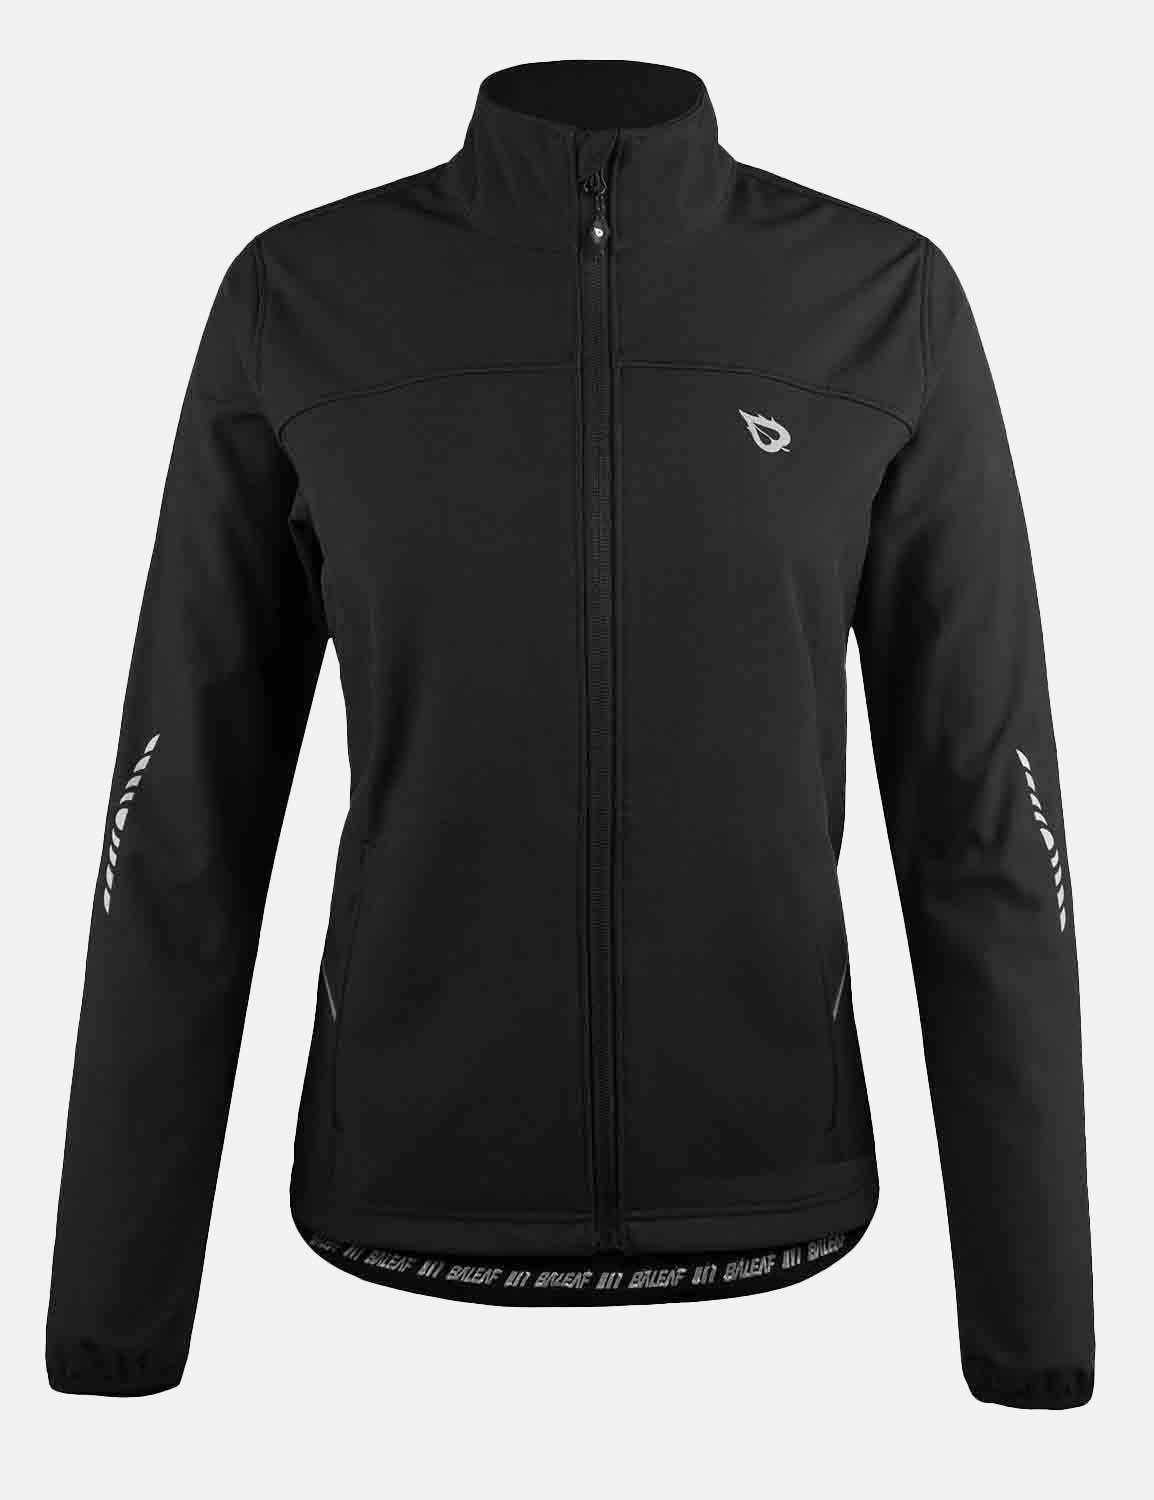 Baleaf Women's Wind- & Waterproof Thermal Long Sleeved Cycling Jacket aaa464 Black Front